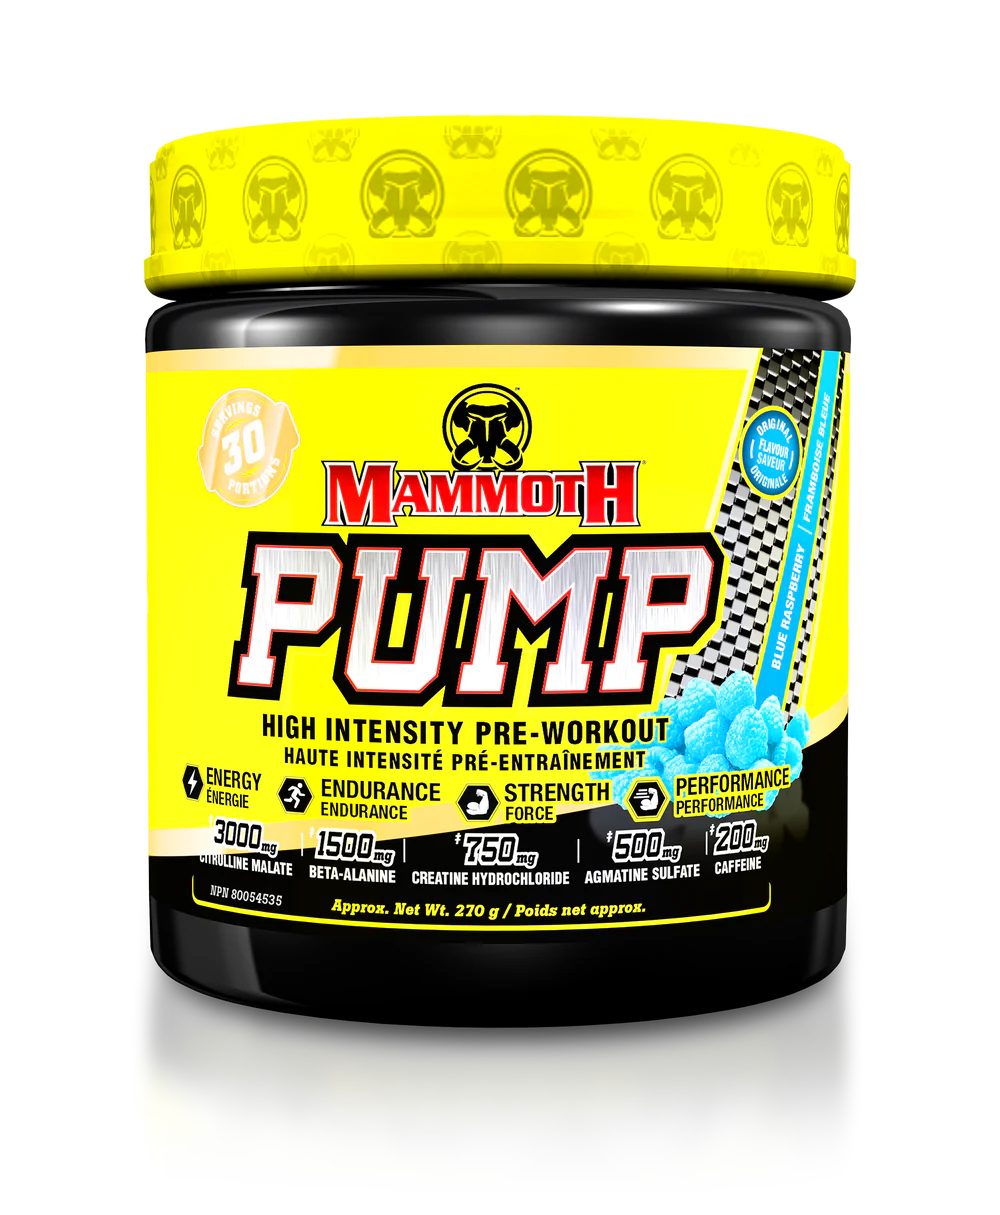 Mammoth Pump Pre-Workout